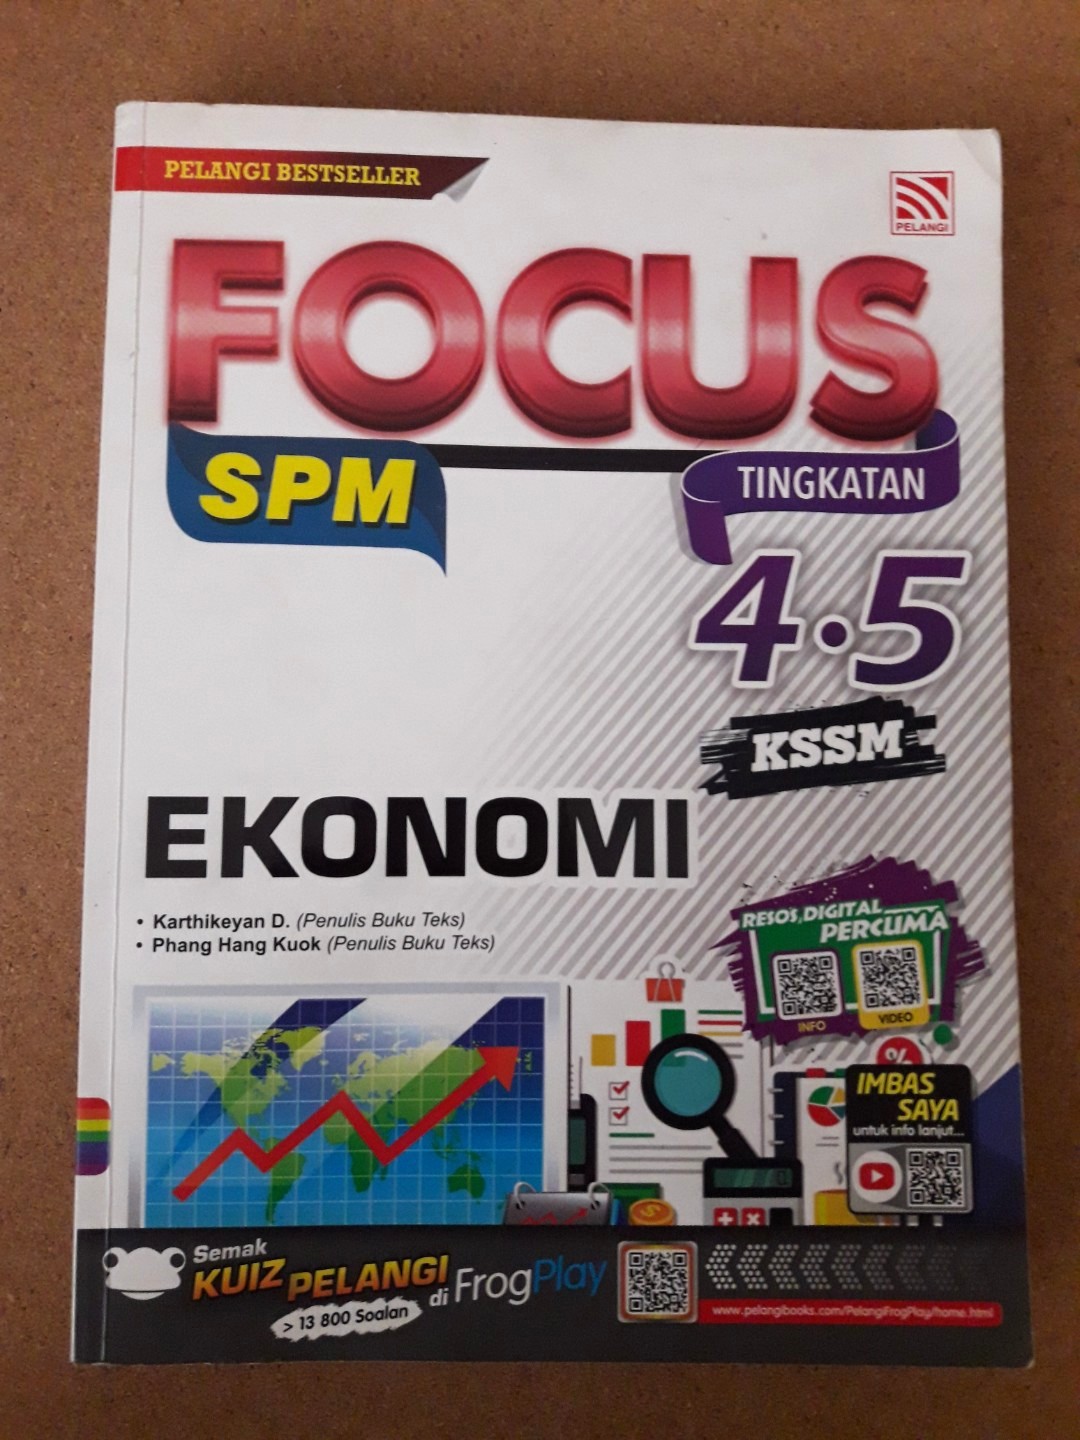 Focus Ekonomi Tingkatan 4 5 By Pelangi Spm Reference Book Hobbies Toys Books Magazines Textbooks On Carousell